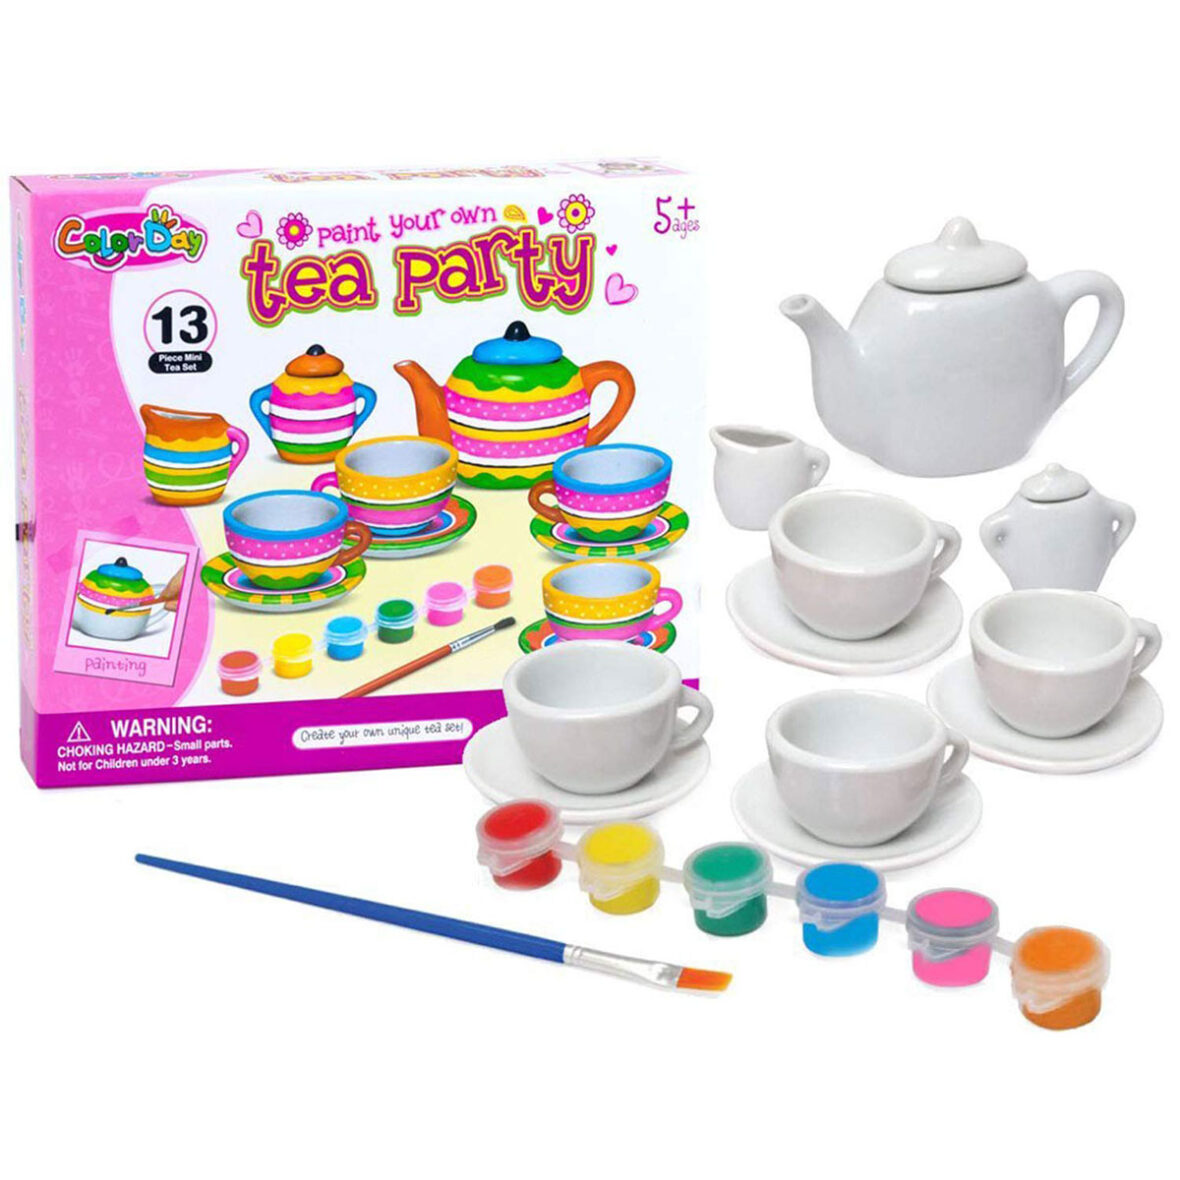 Ceramic Tea Play Set